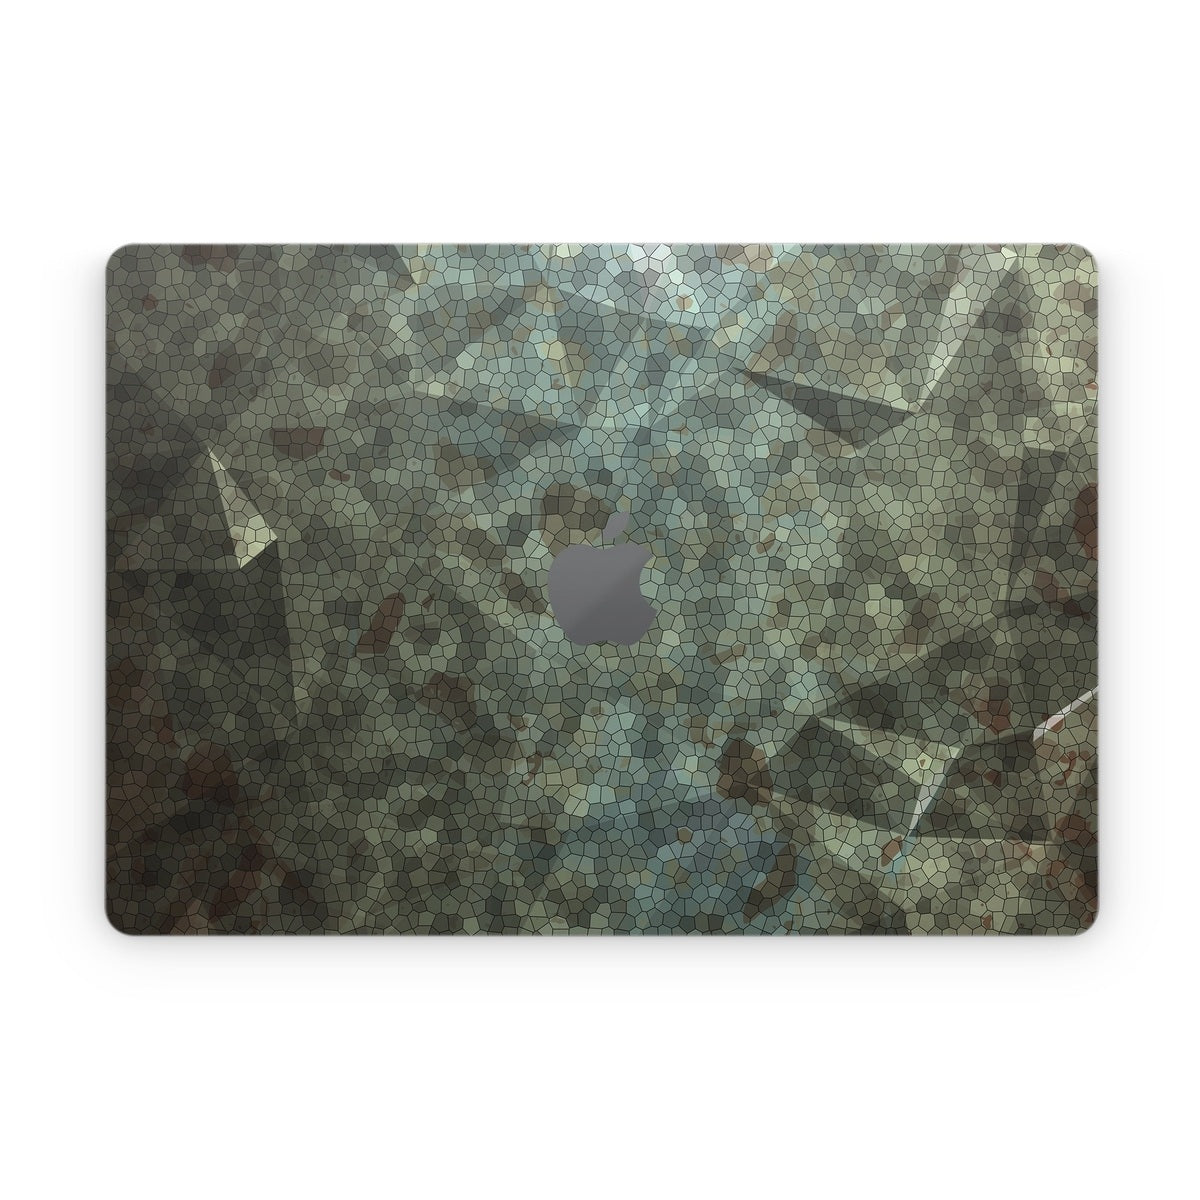 Outcrop - Apple MacBook Skin